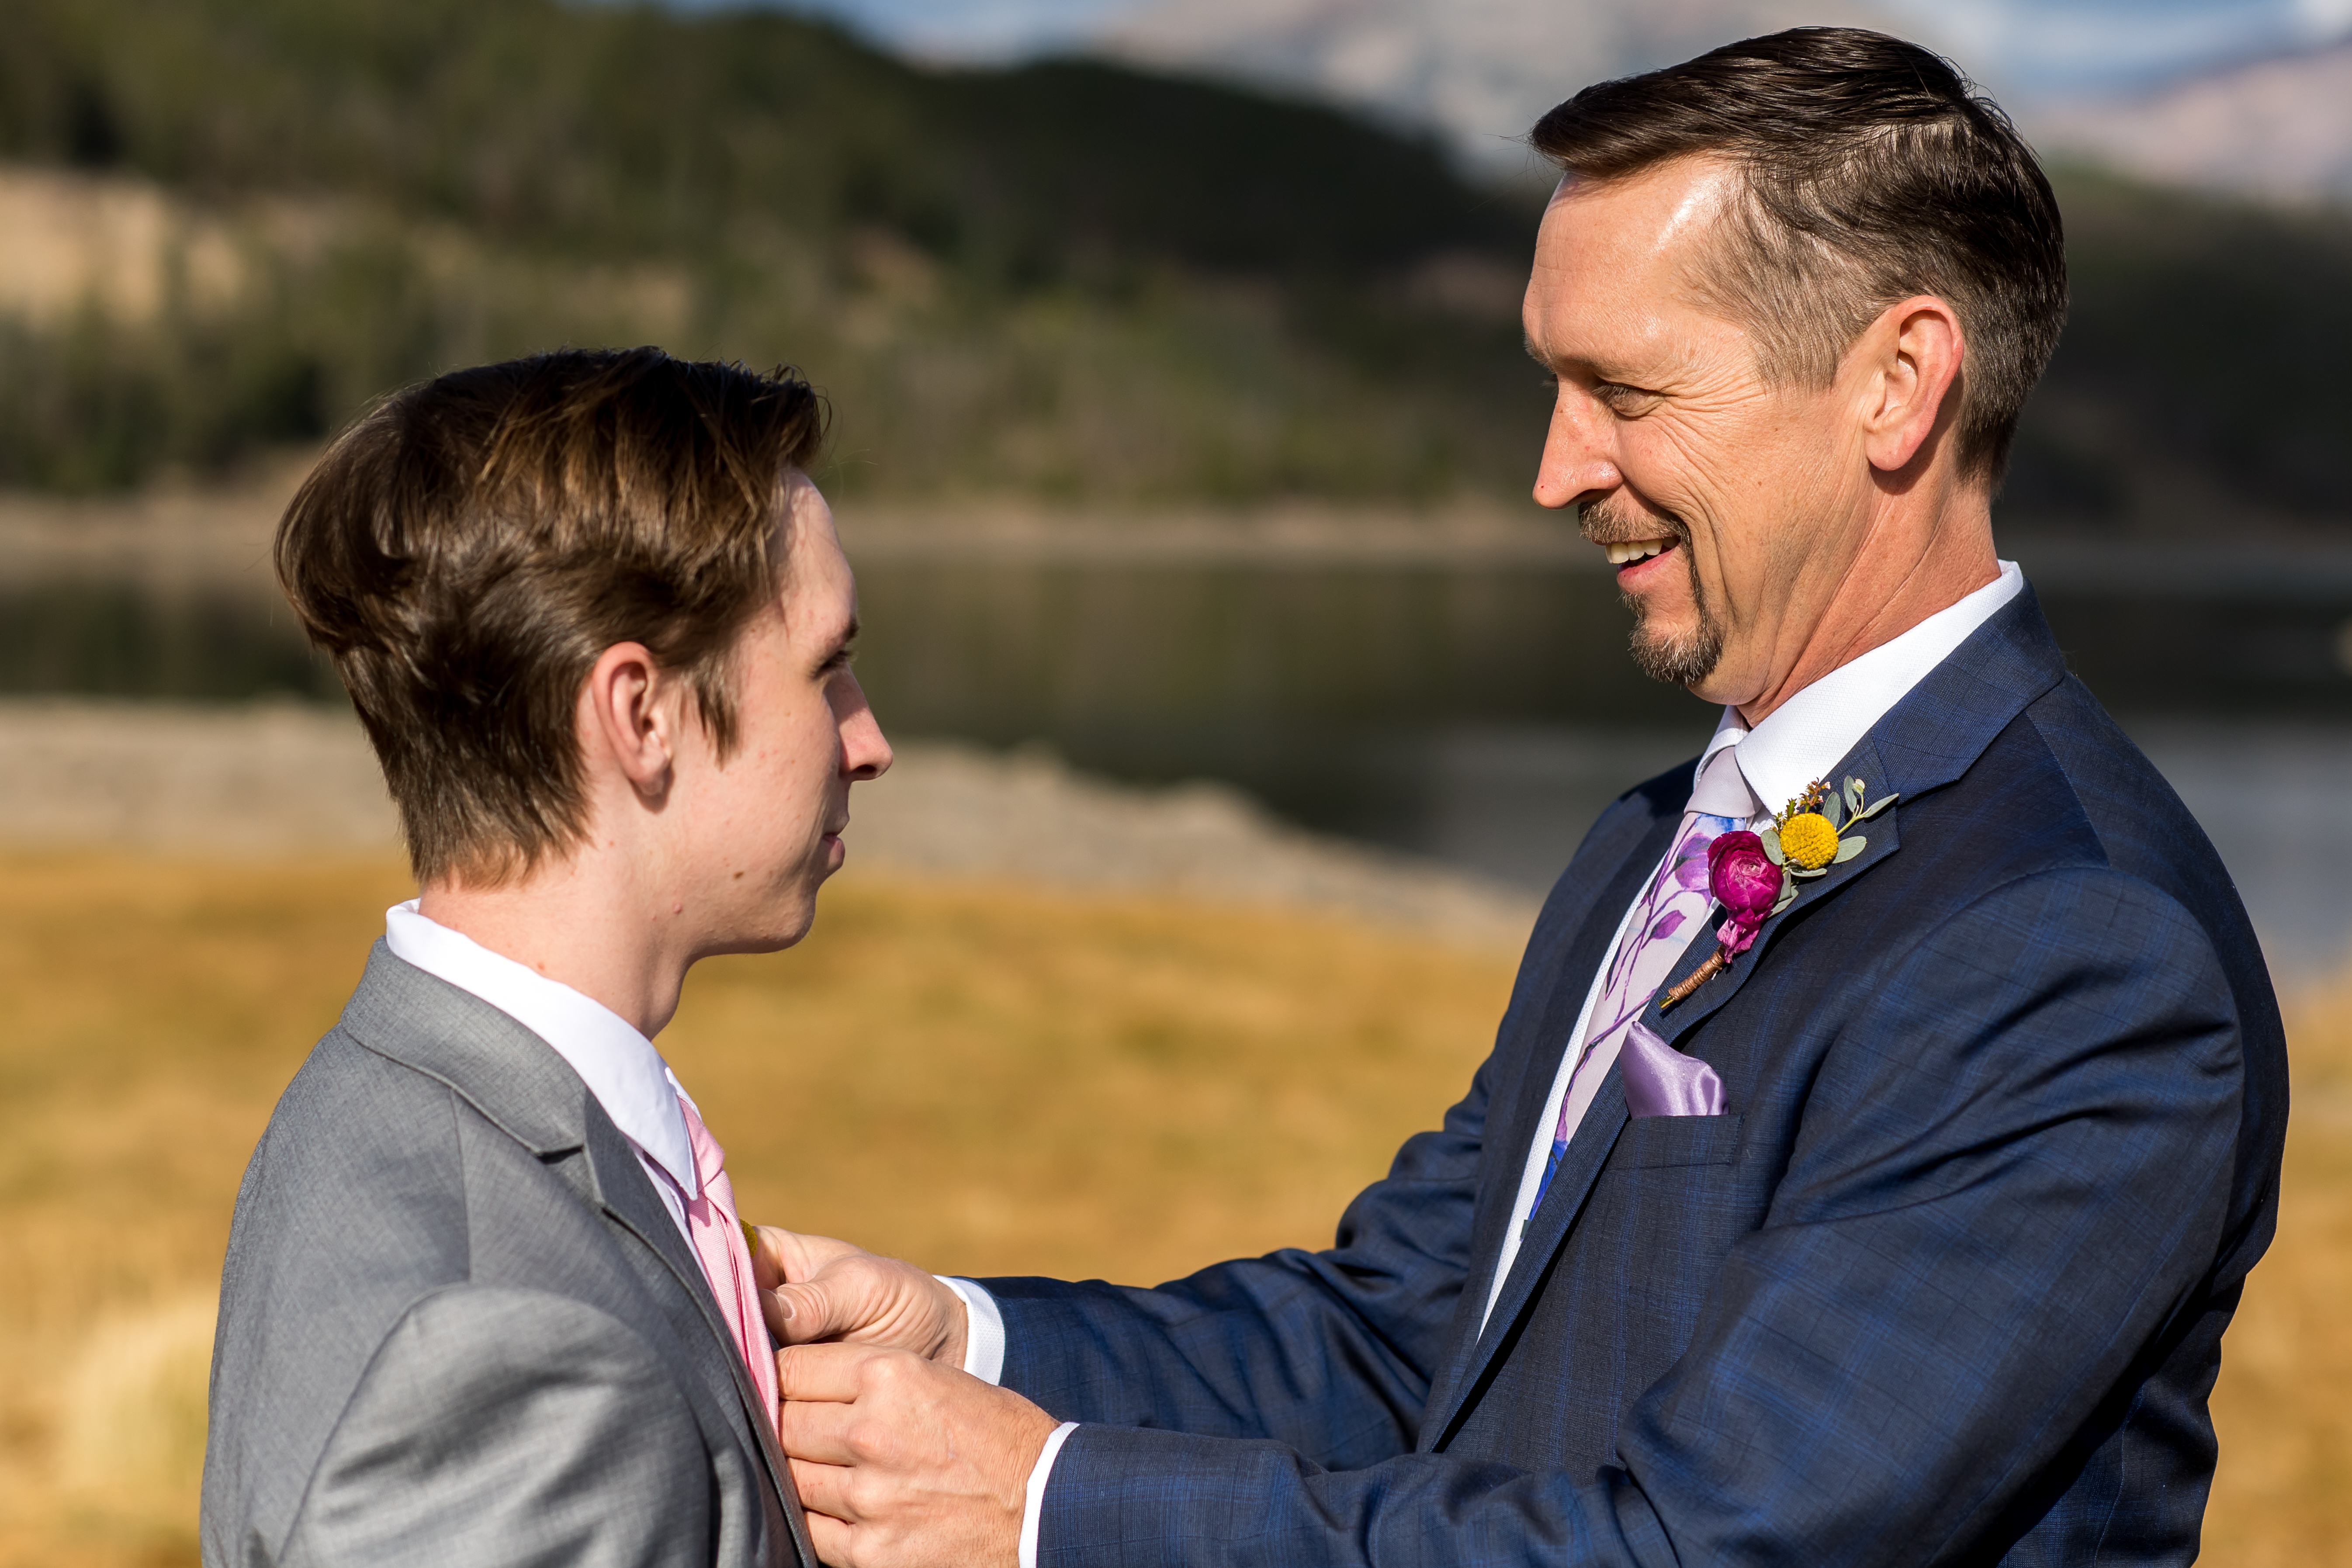 Sapphire Point Wedding photos in Breckenridge, Colorado, near Dillion Reservoir.